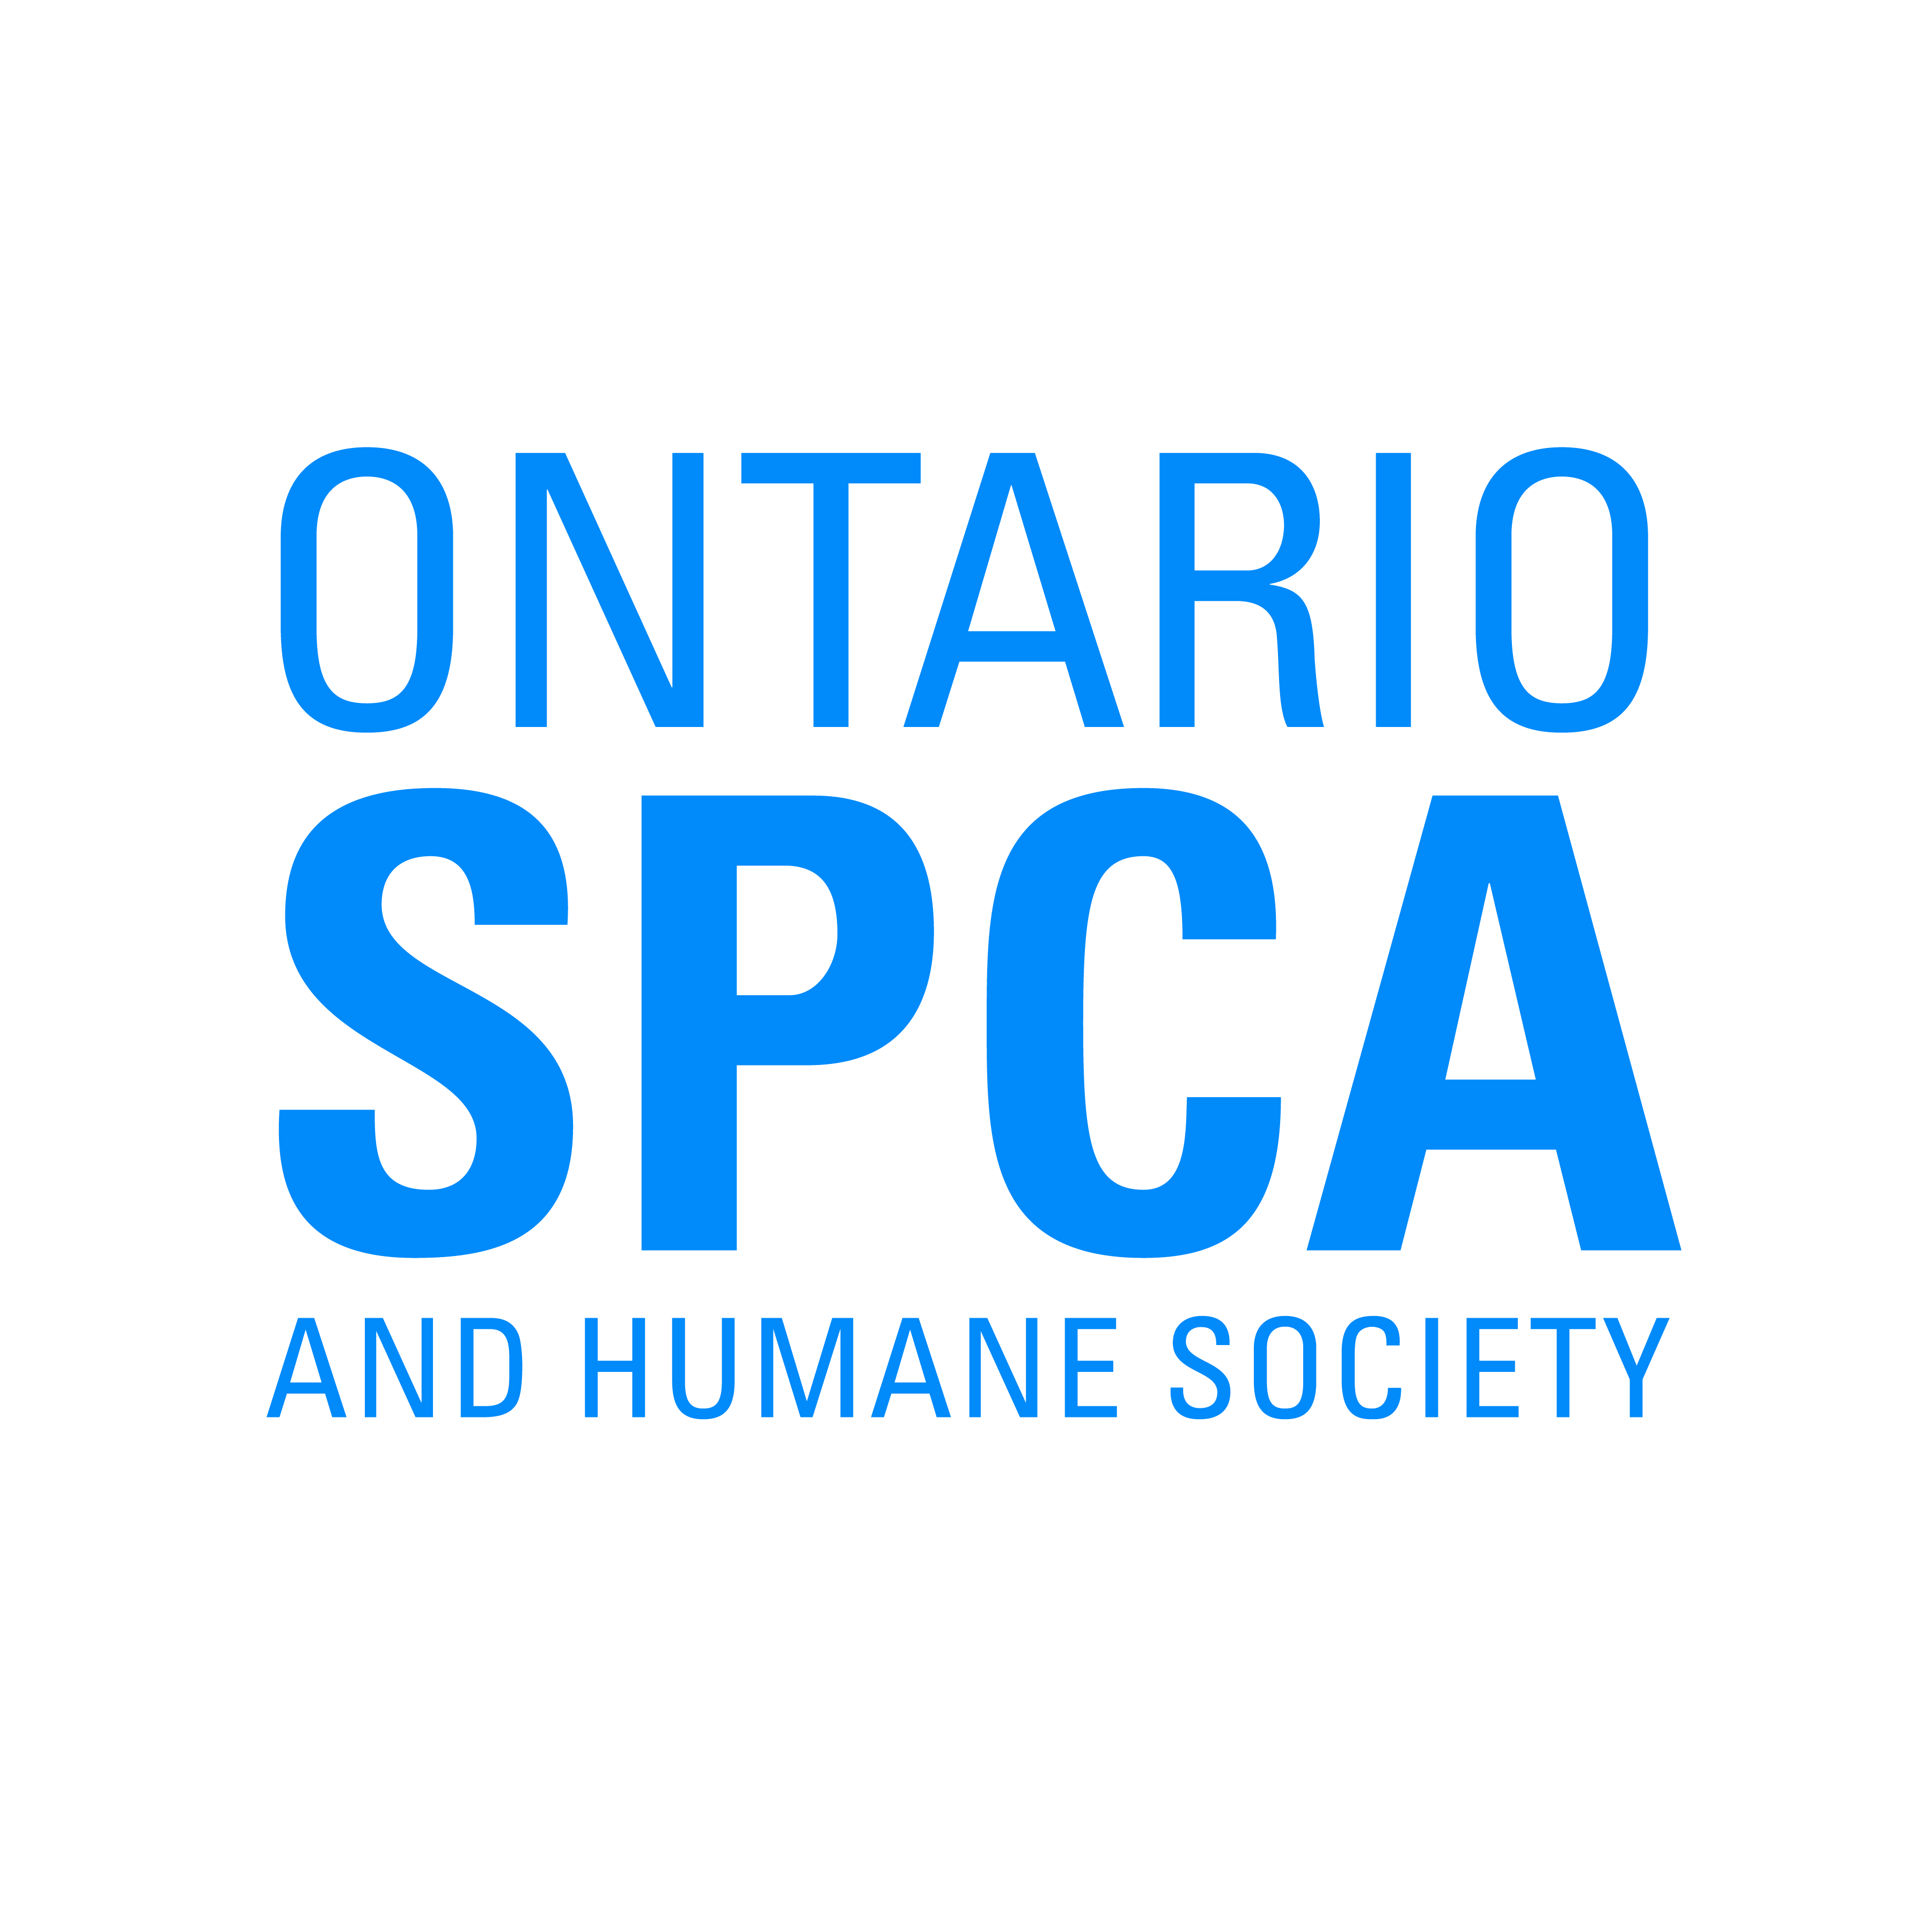 Ontario SPCA and Humane Society - Ontario SPCA and Humane Society